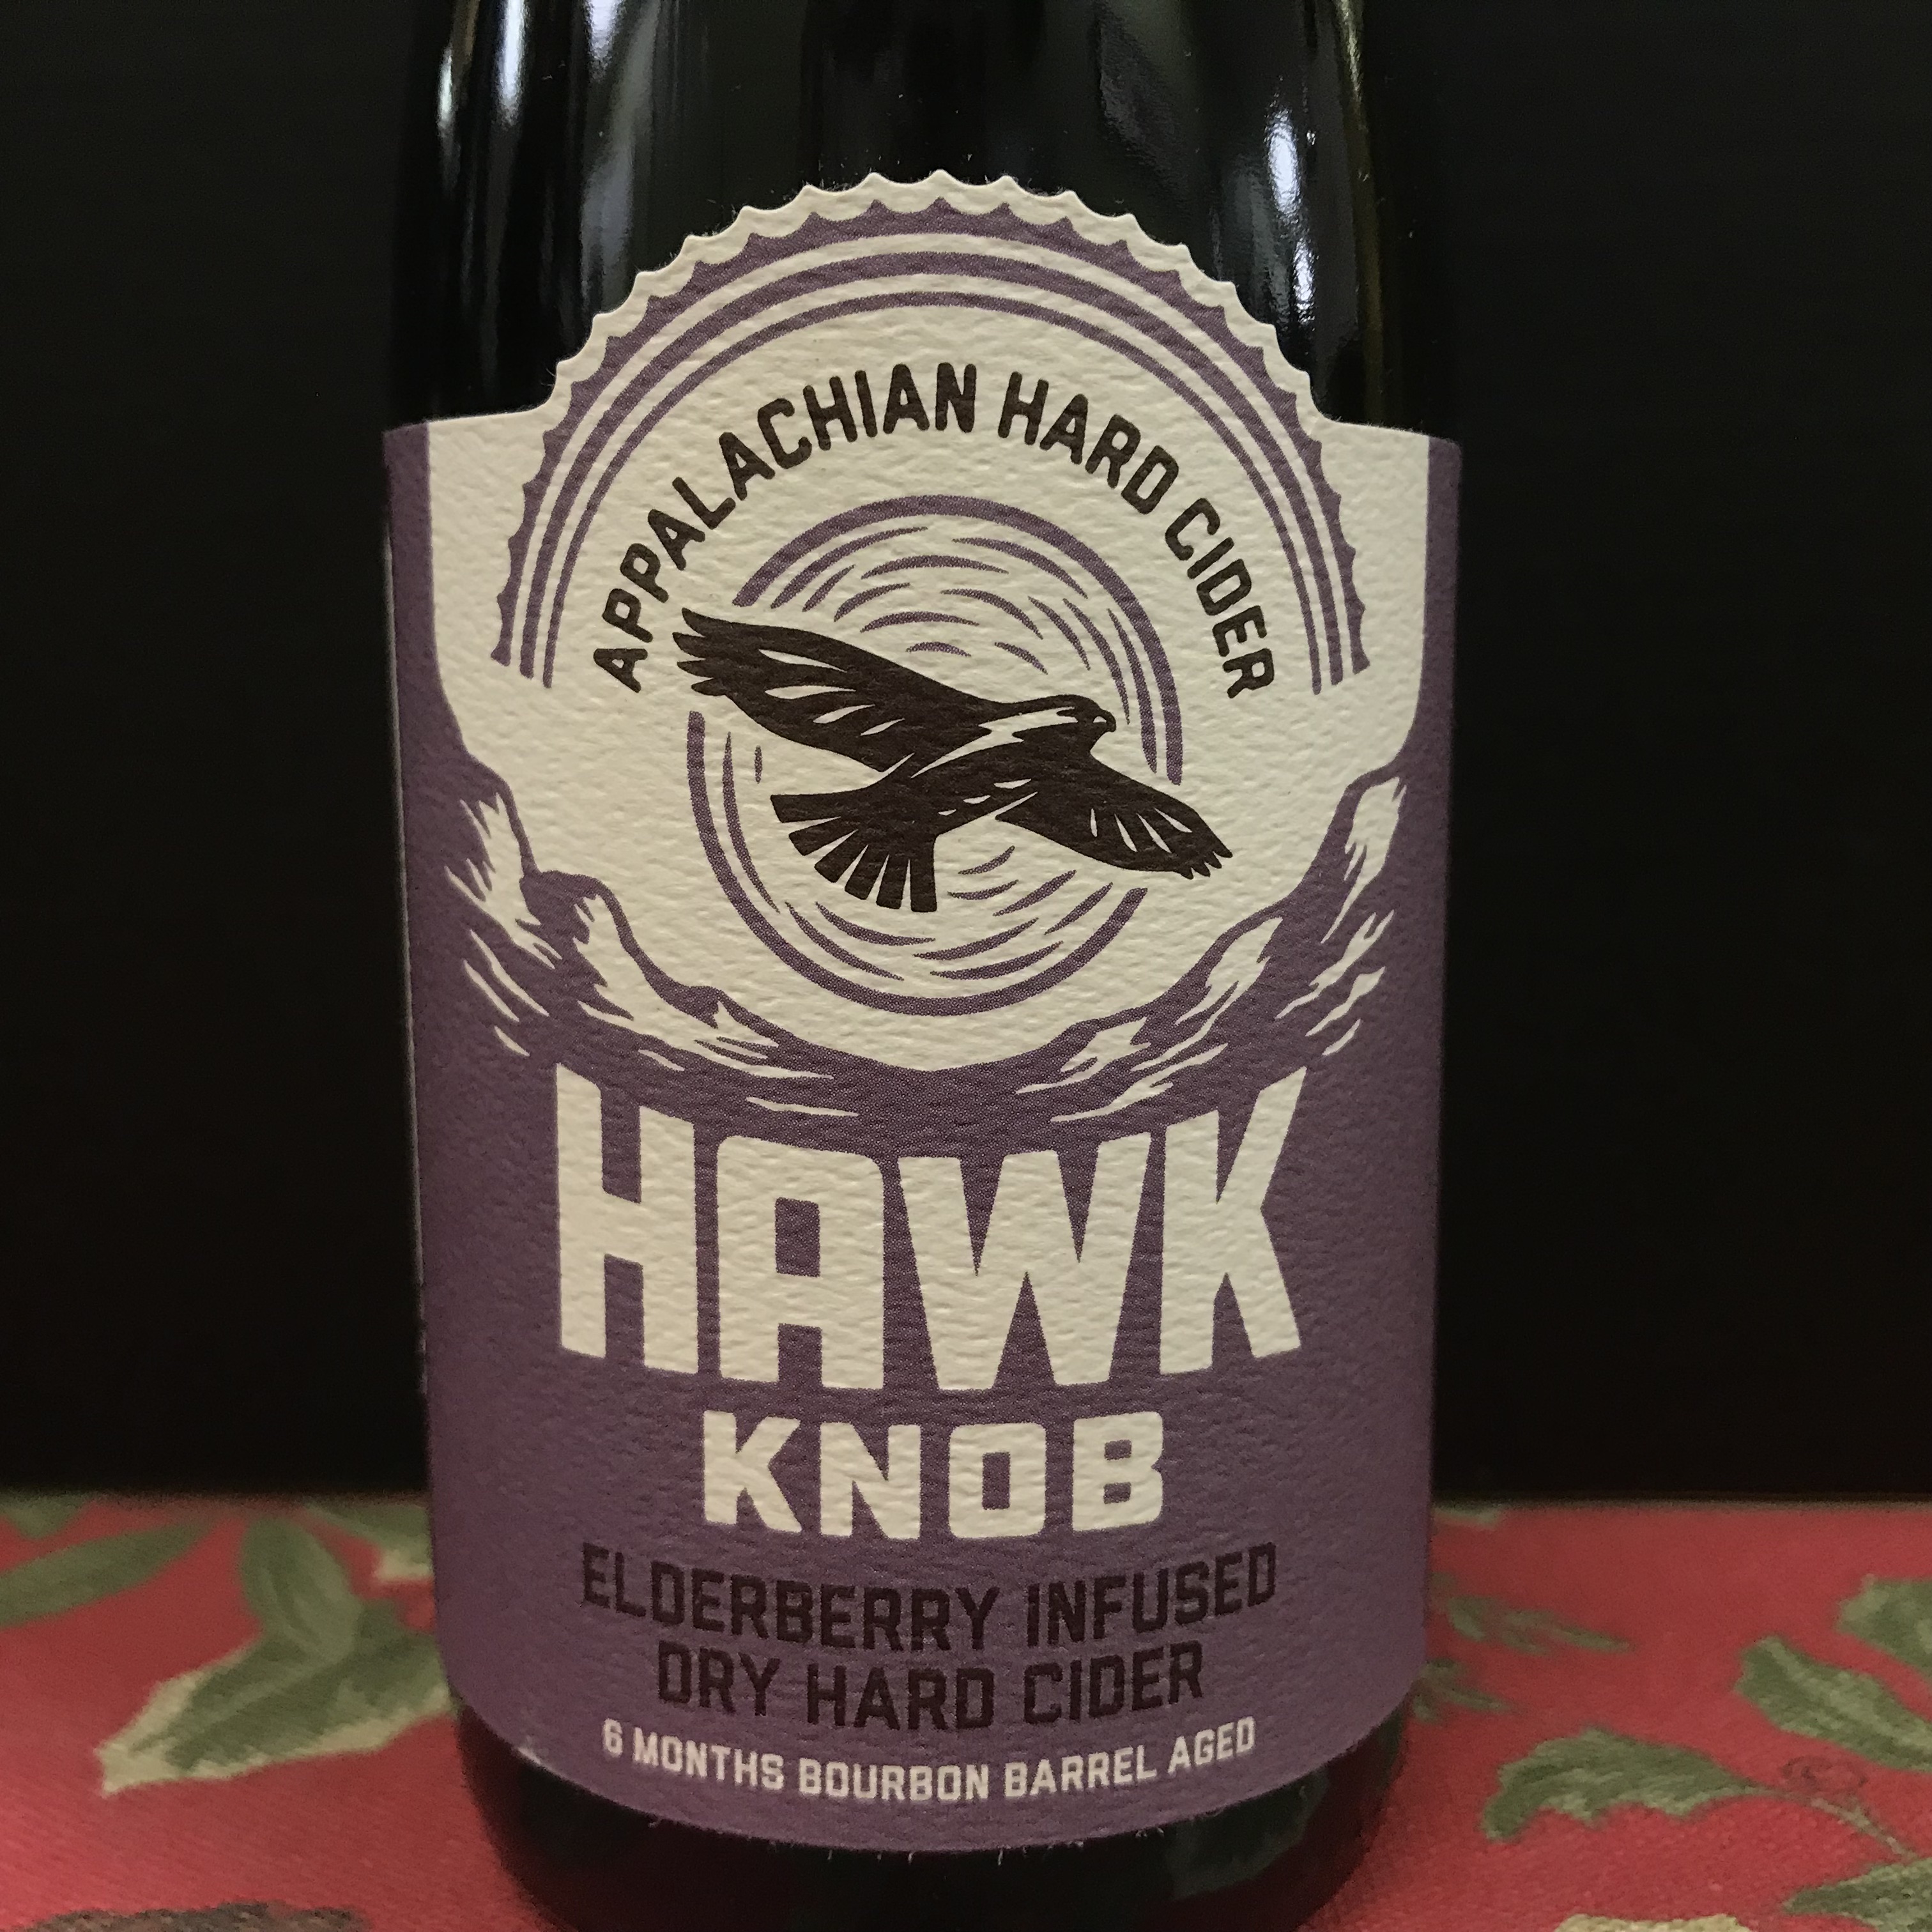 Appalachian Hawk Knob Eldeberry infused cider 500ml